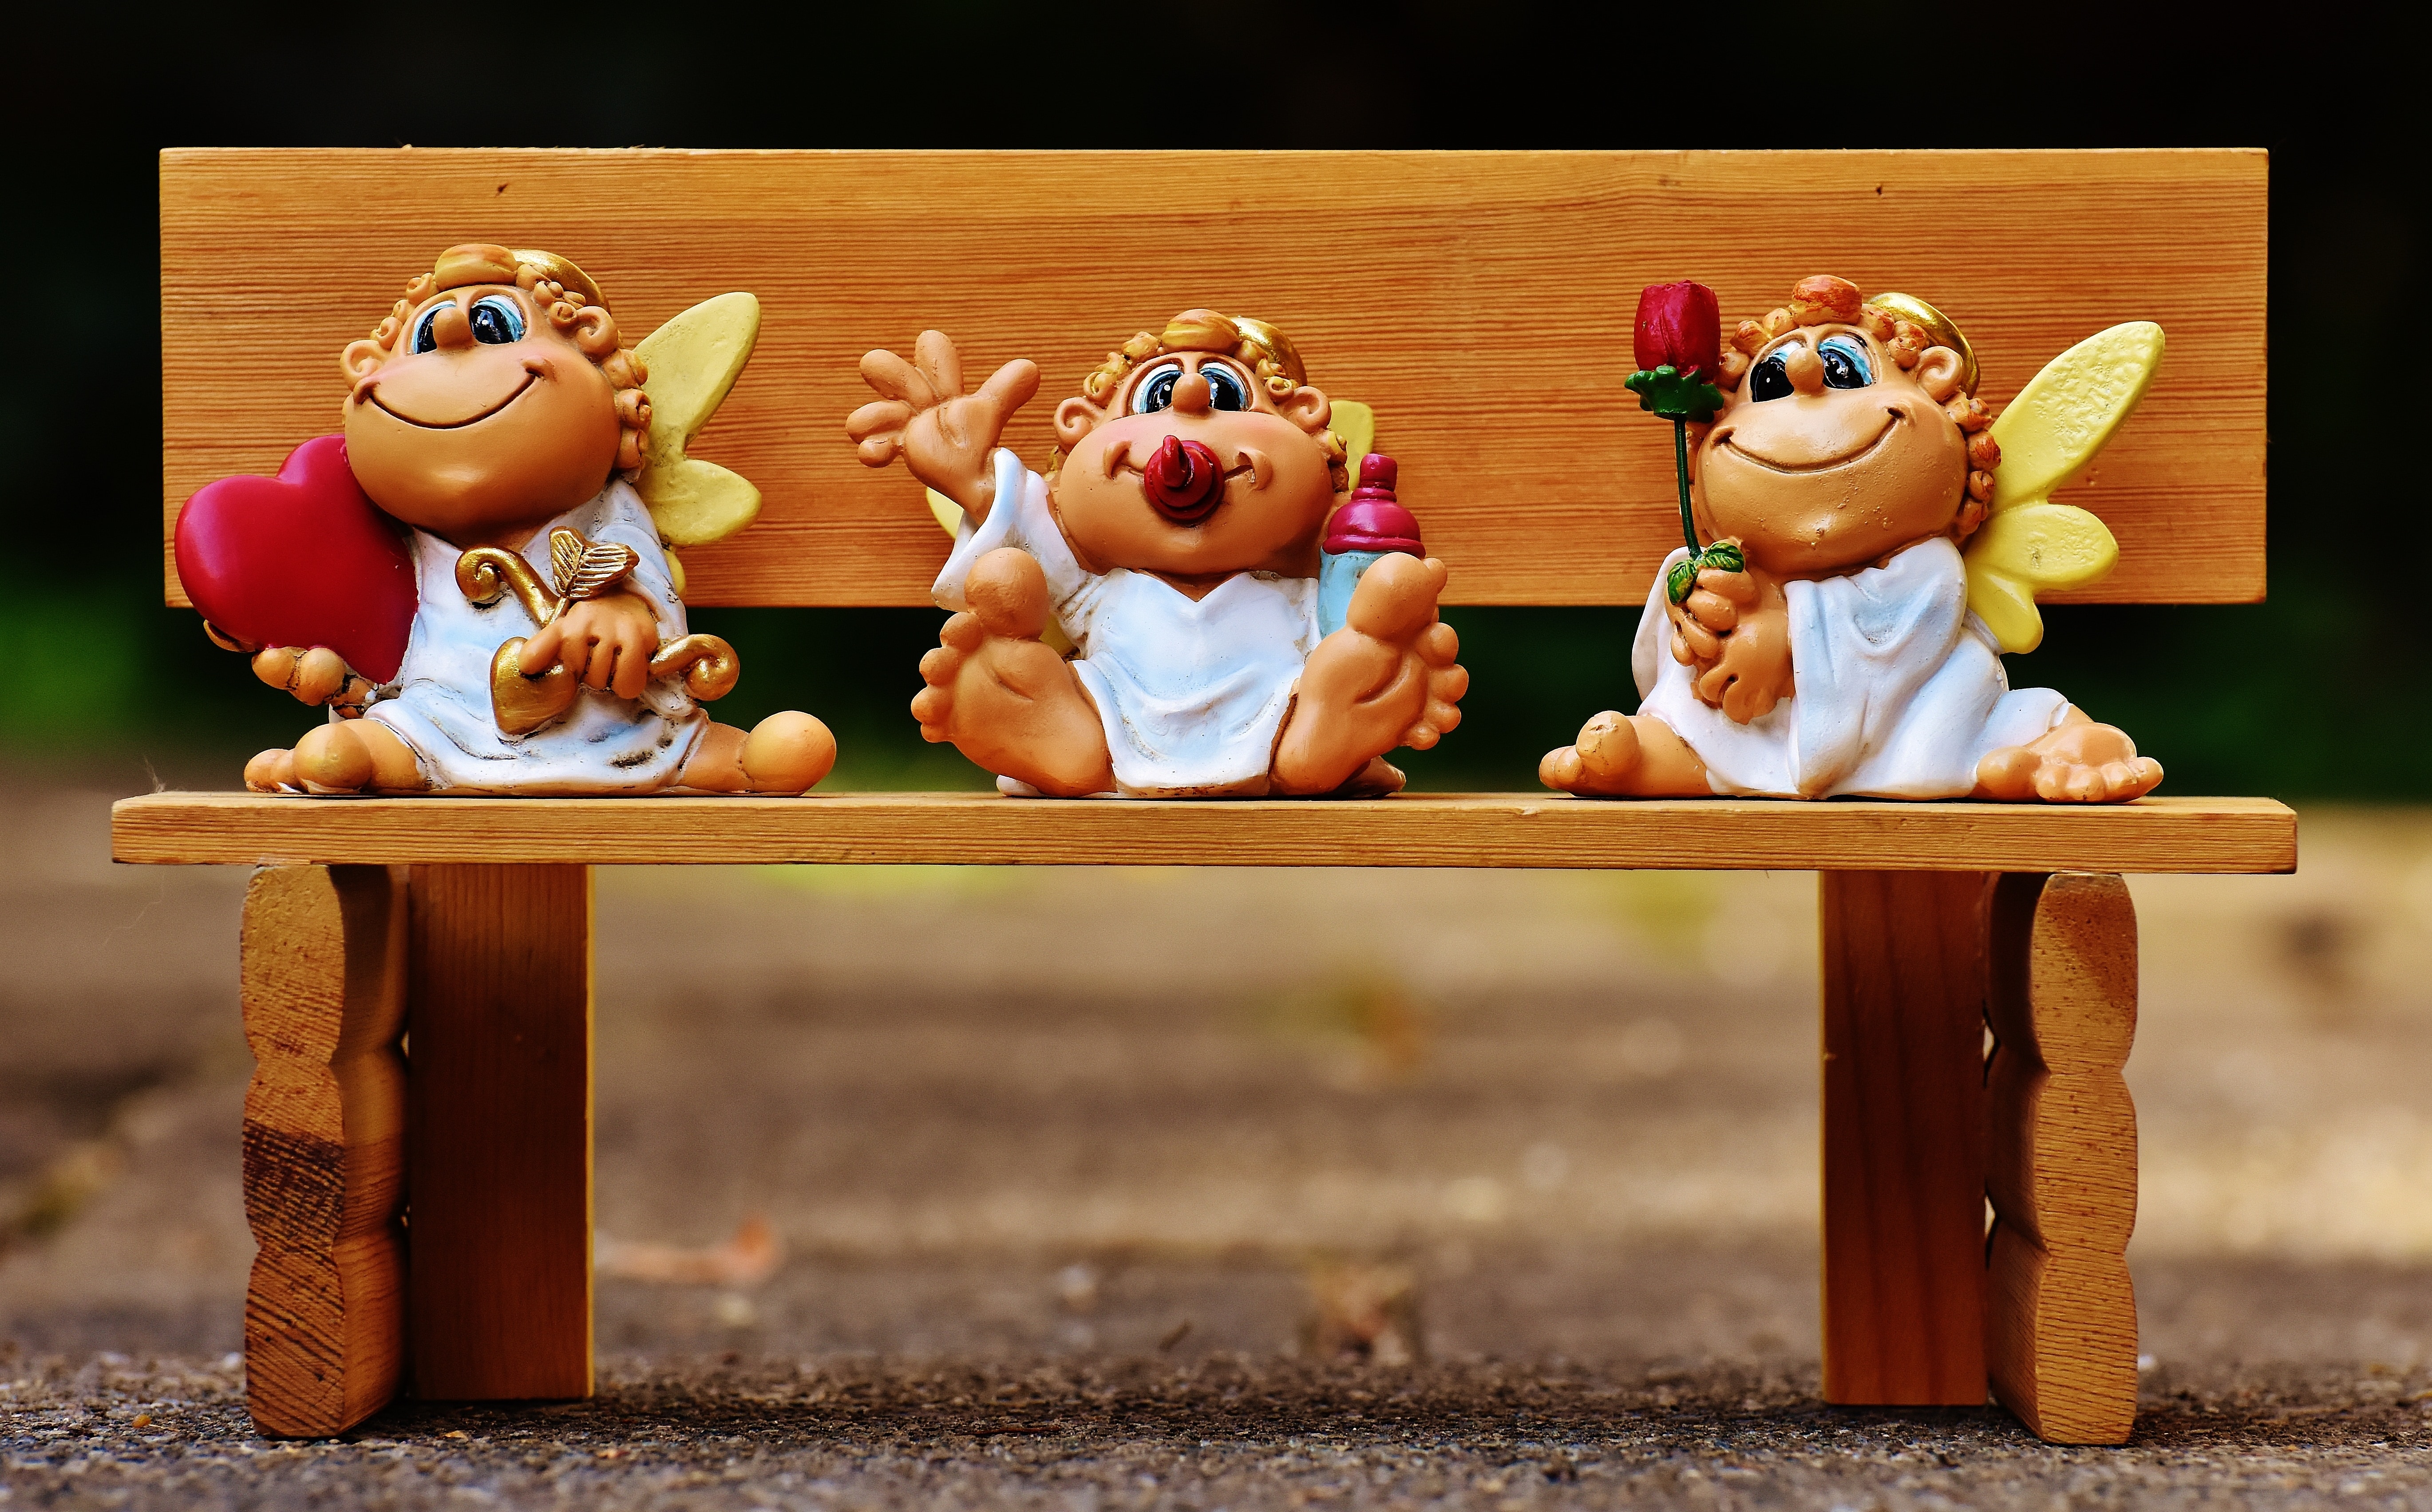 white and brown cherub sitting on bench figurines